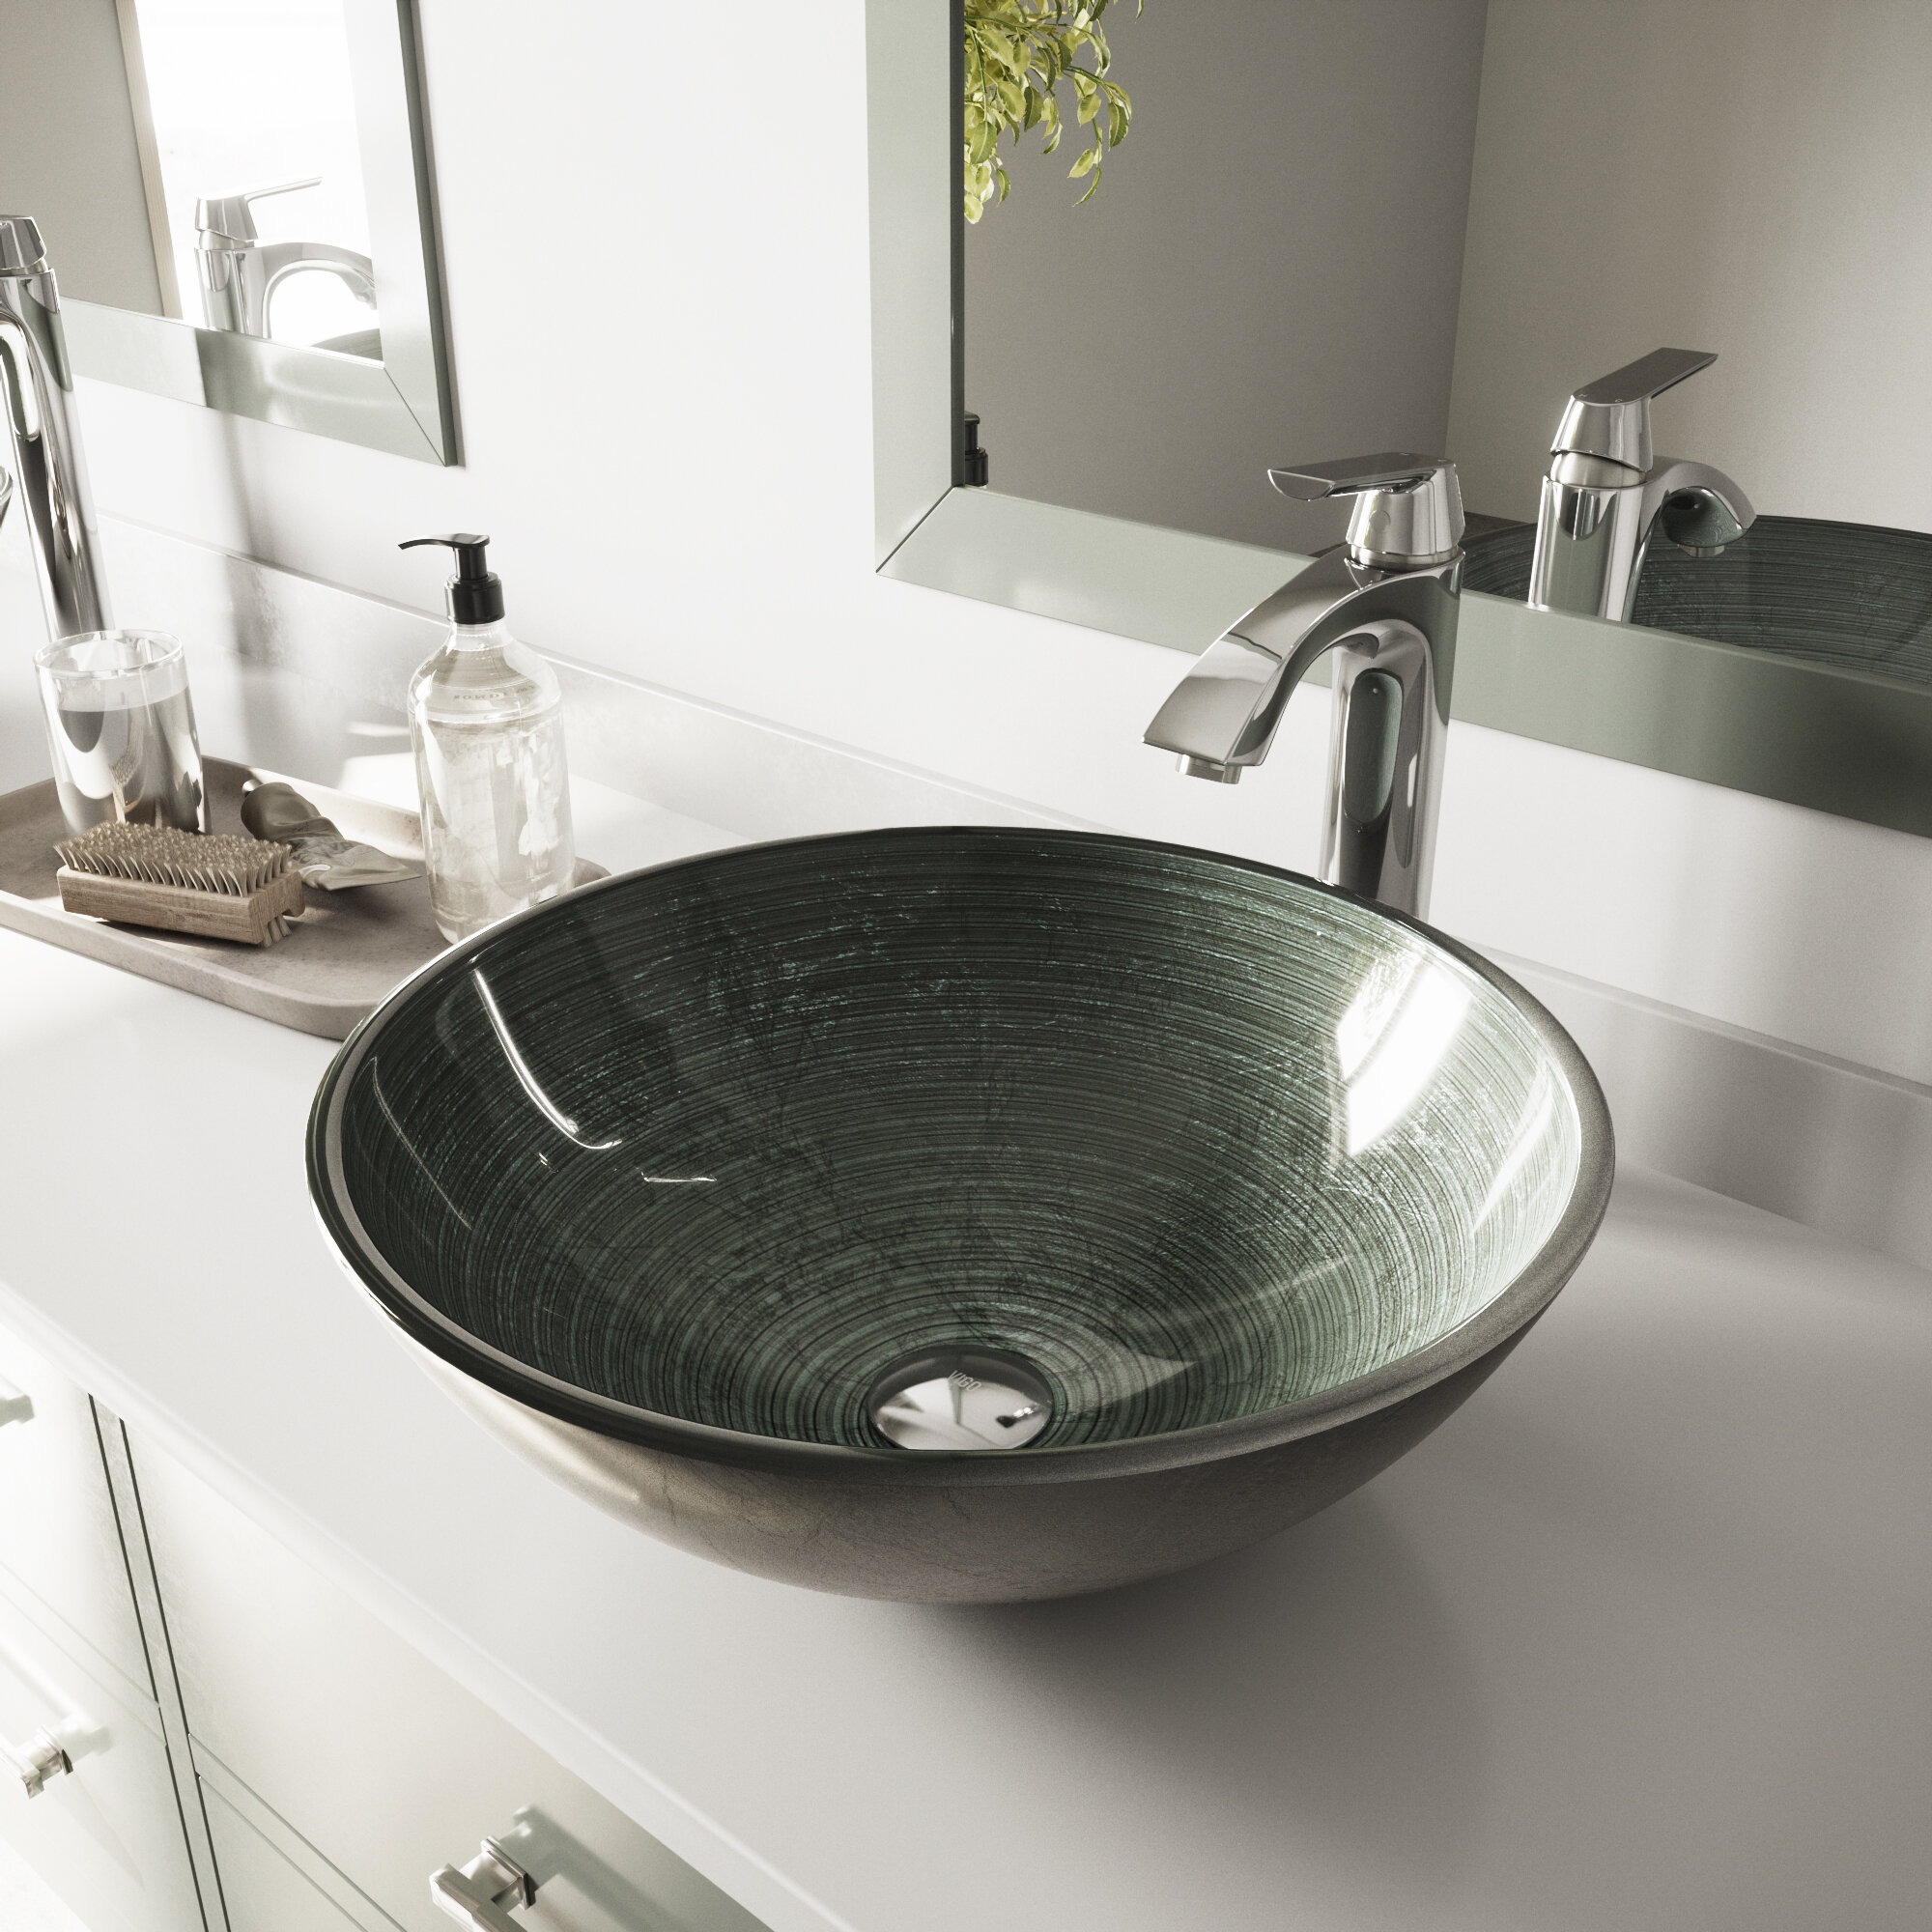 Details about   Bathroom Tempered Glass Basin Vessel Sink Bowl  Mixer Faucet Tap Drain Combo Set 